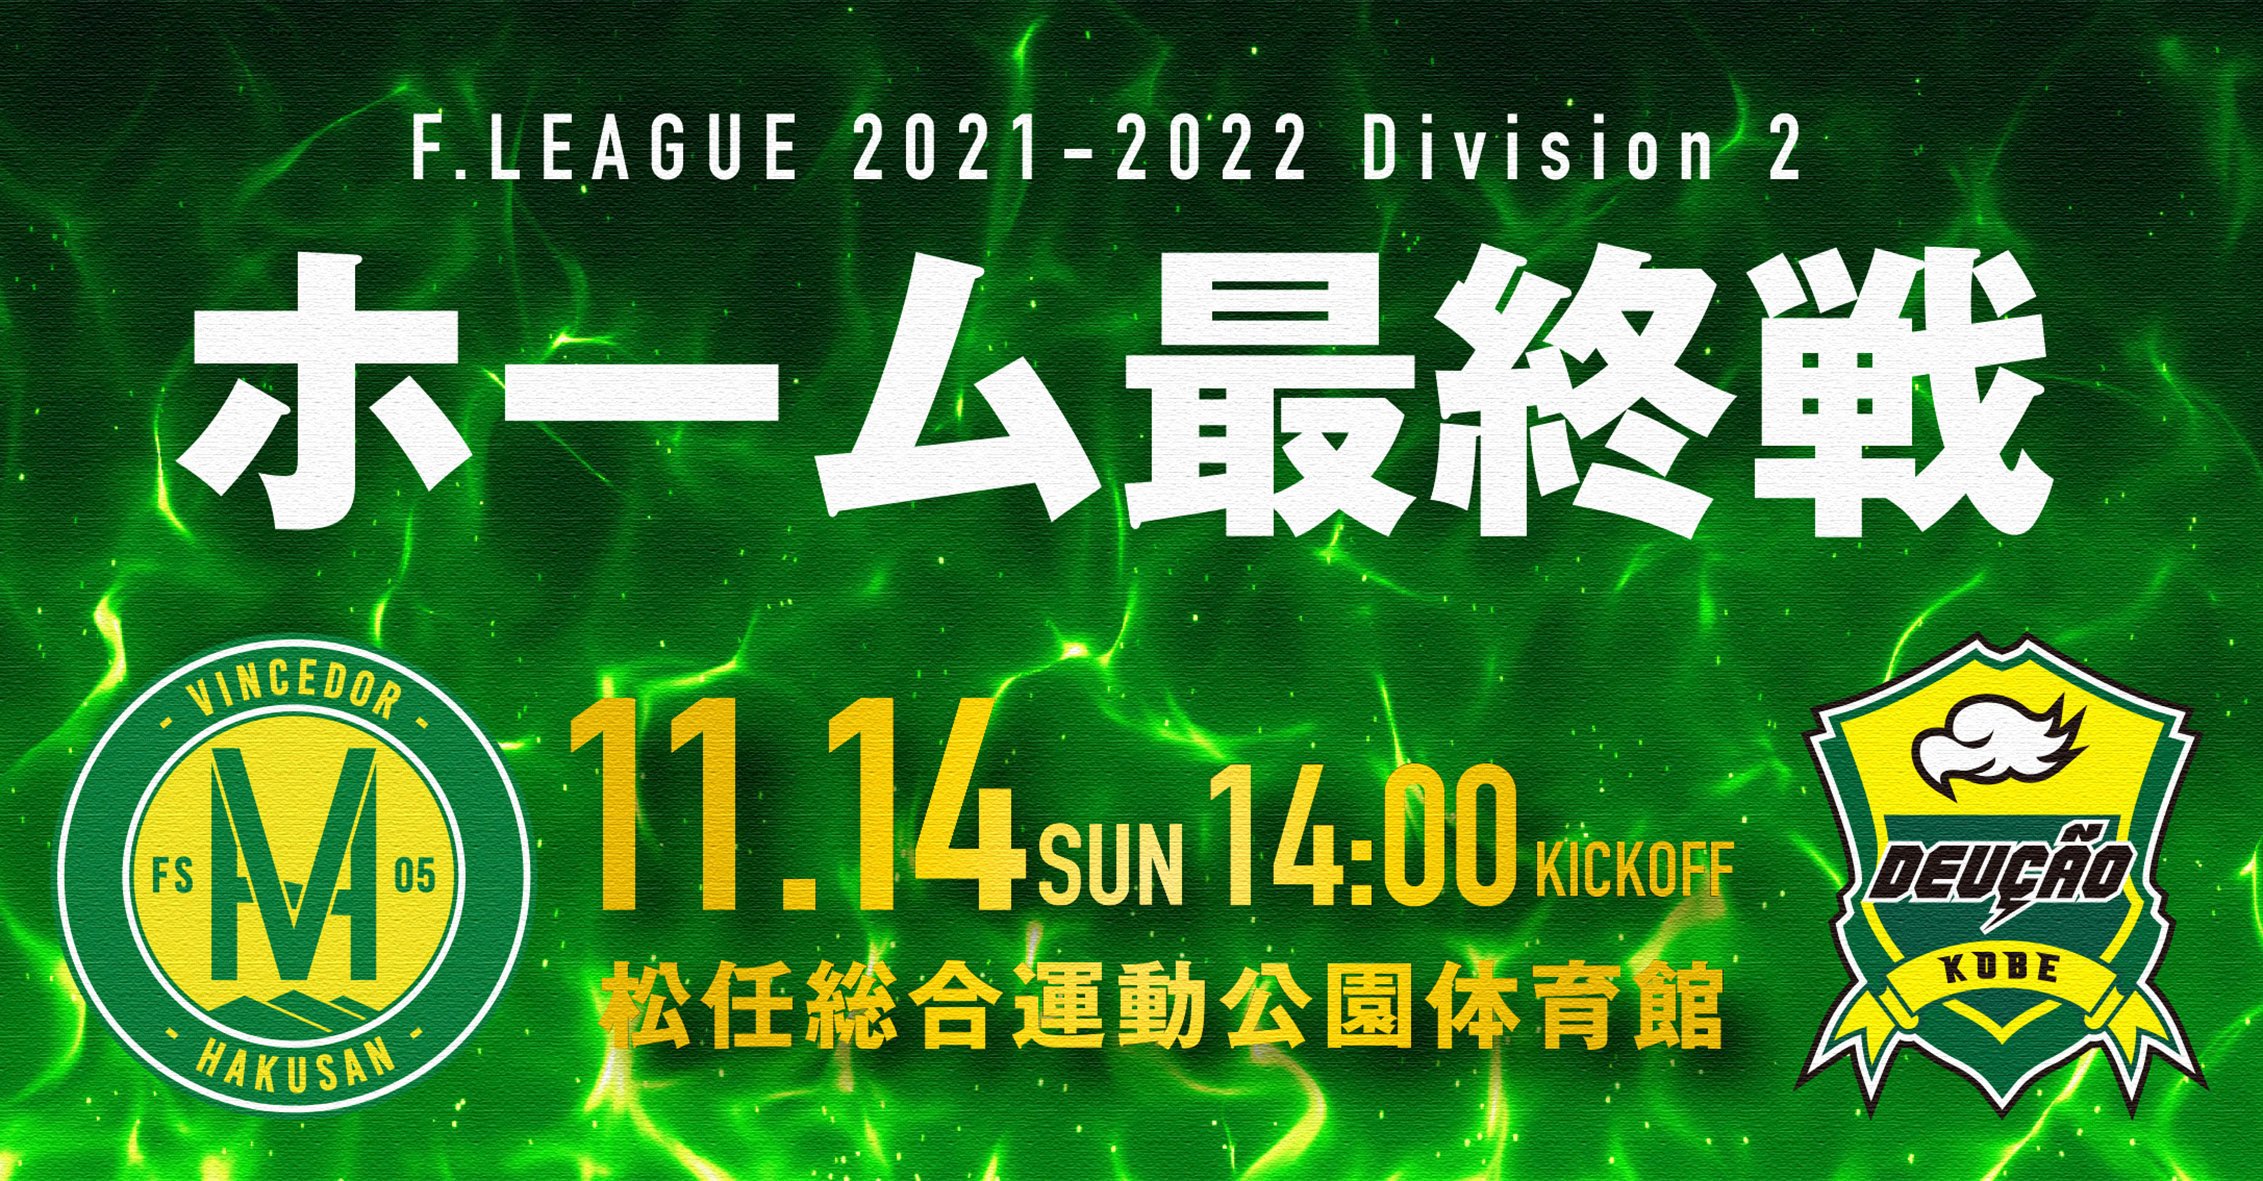 Fリーグ 2021-2022 ディビジョン2 第10節｜ヴィンセドール白山vs.デウソン神戸